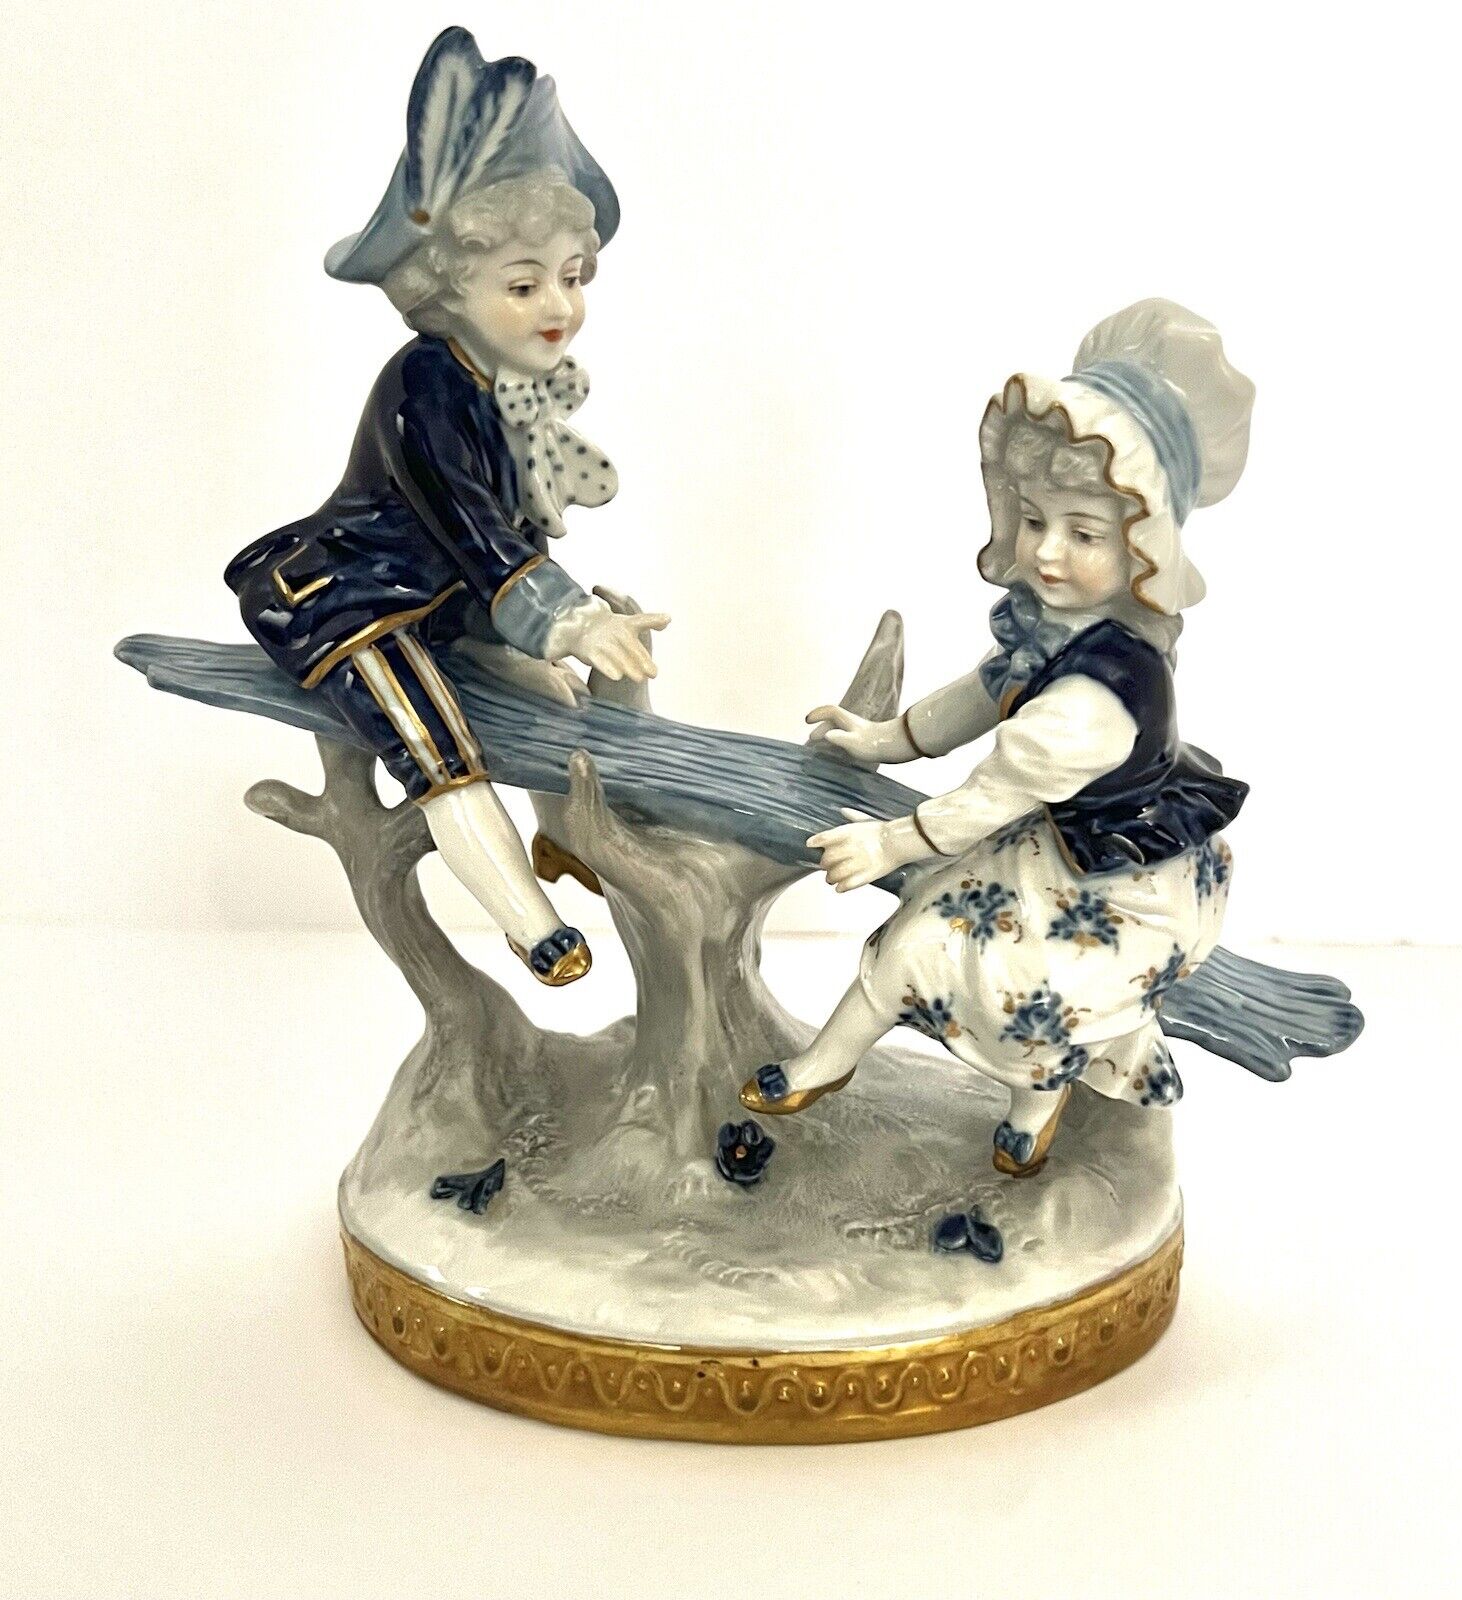 Antique/Vintage German Volkstedt German Porcelain Boy/Girl Playing On A Seesaw.